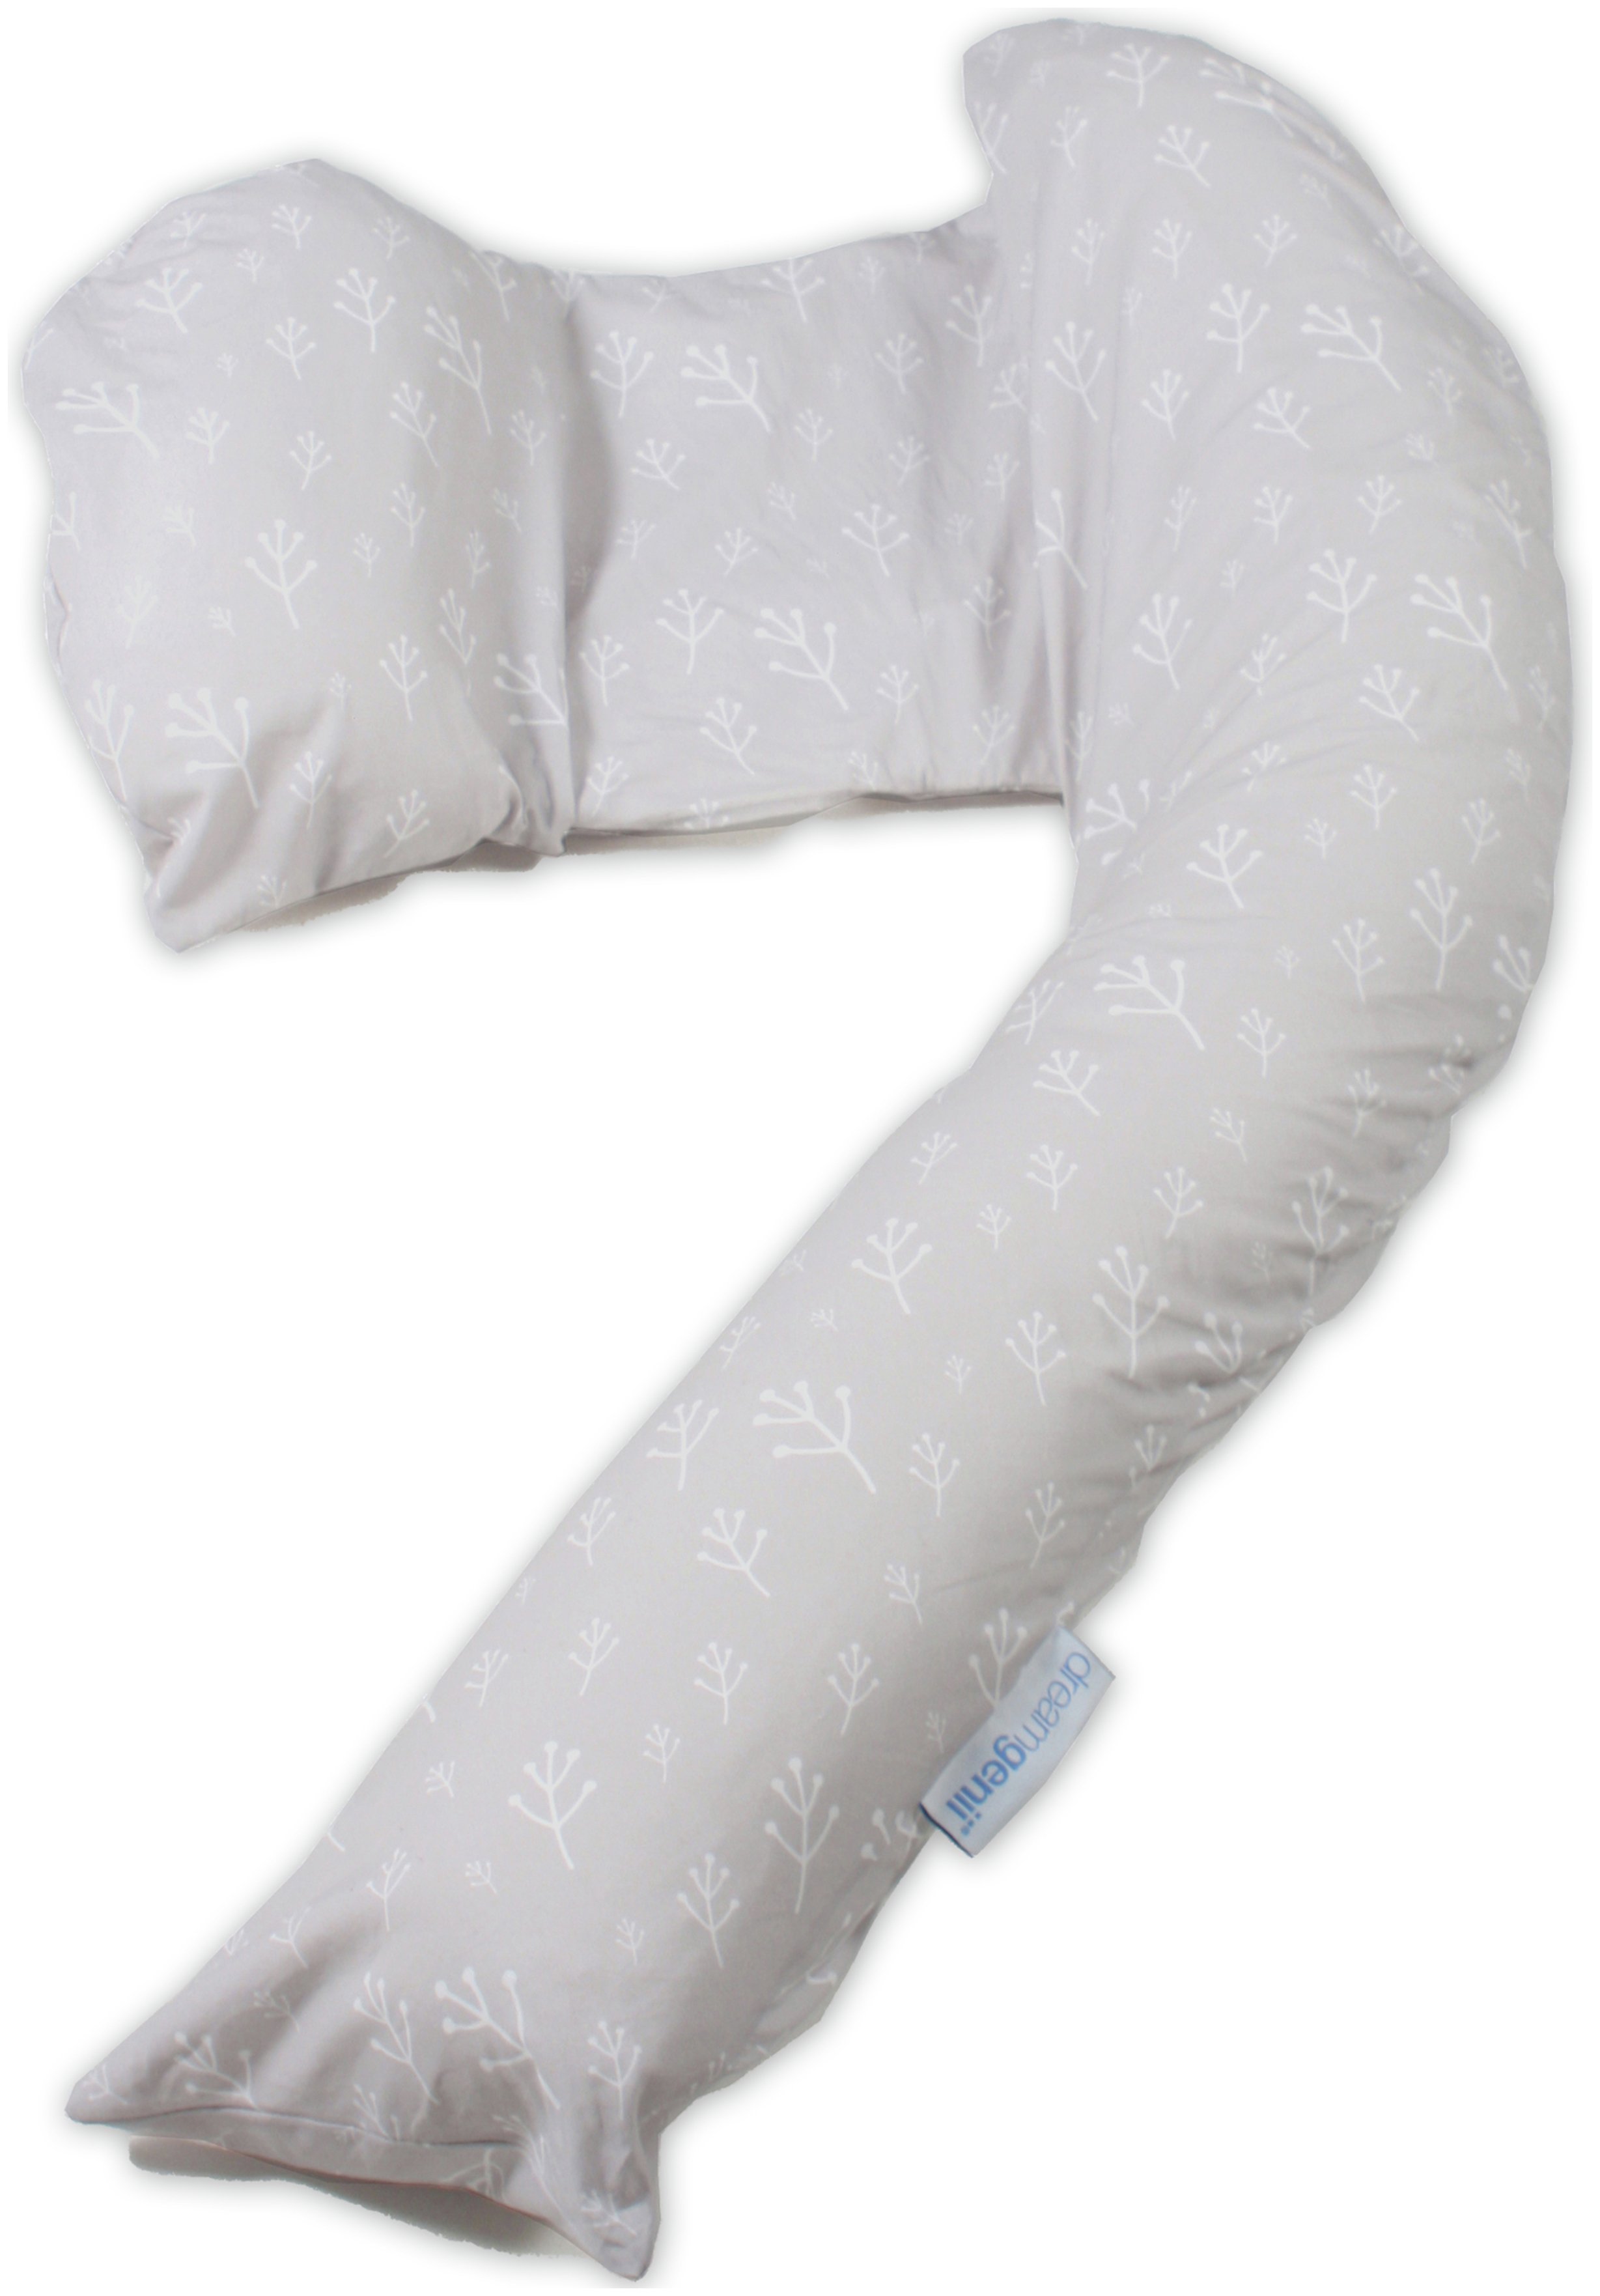 Dreamgenii Pregnancy Pillow Review